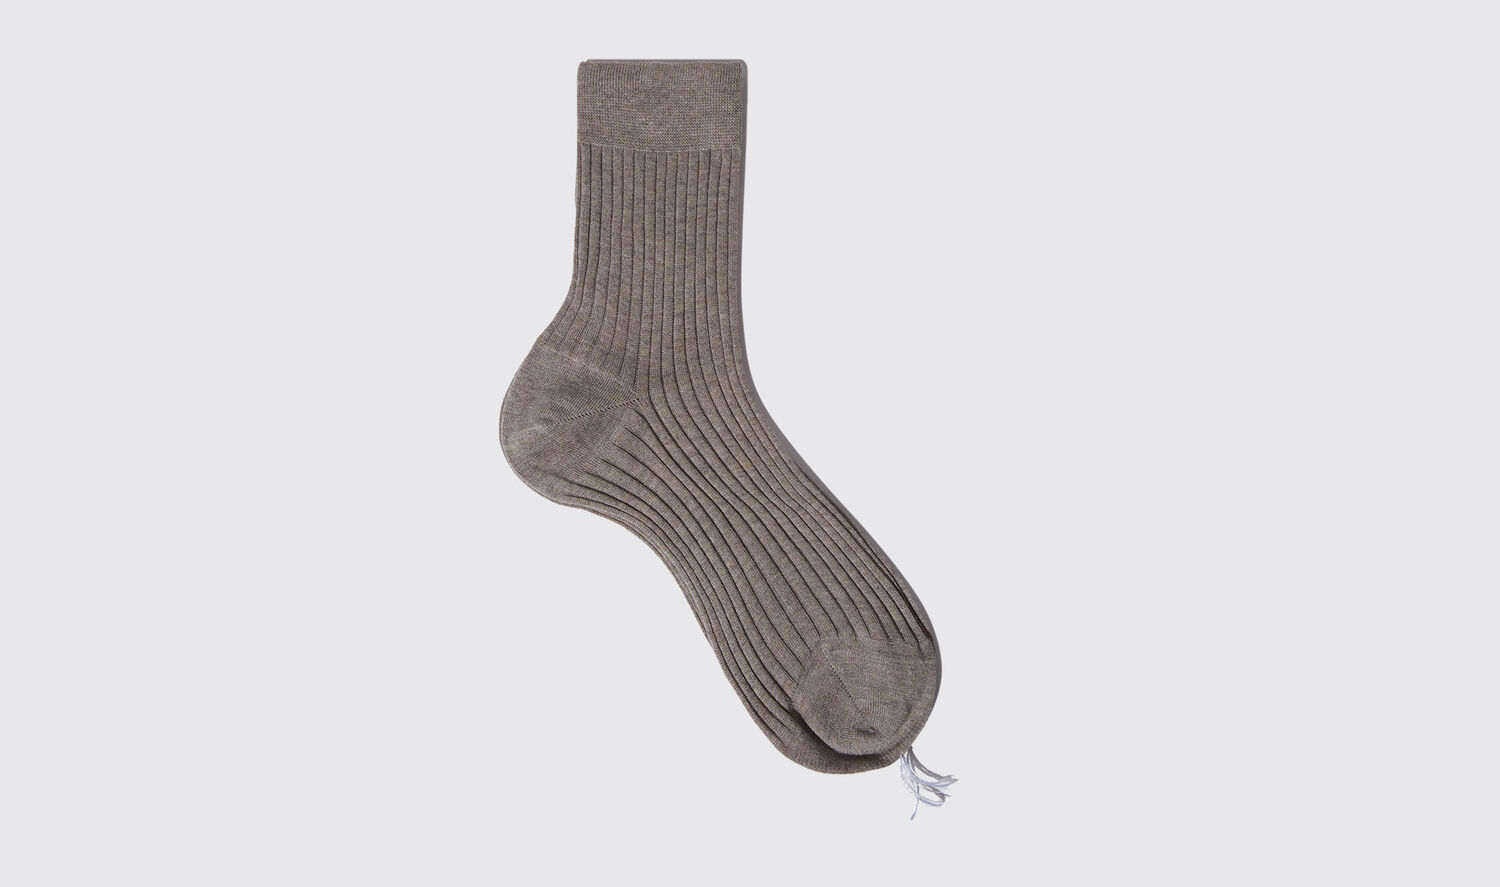 Scarosso Socks Grey Cotton Ankle Socks Cotton In Grey - Cotton